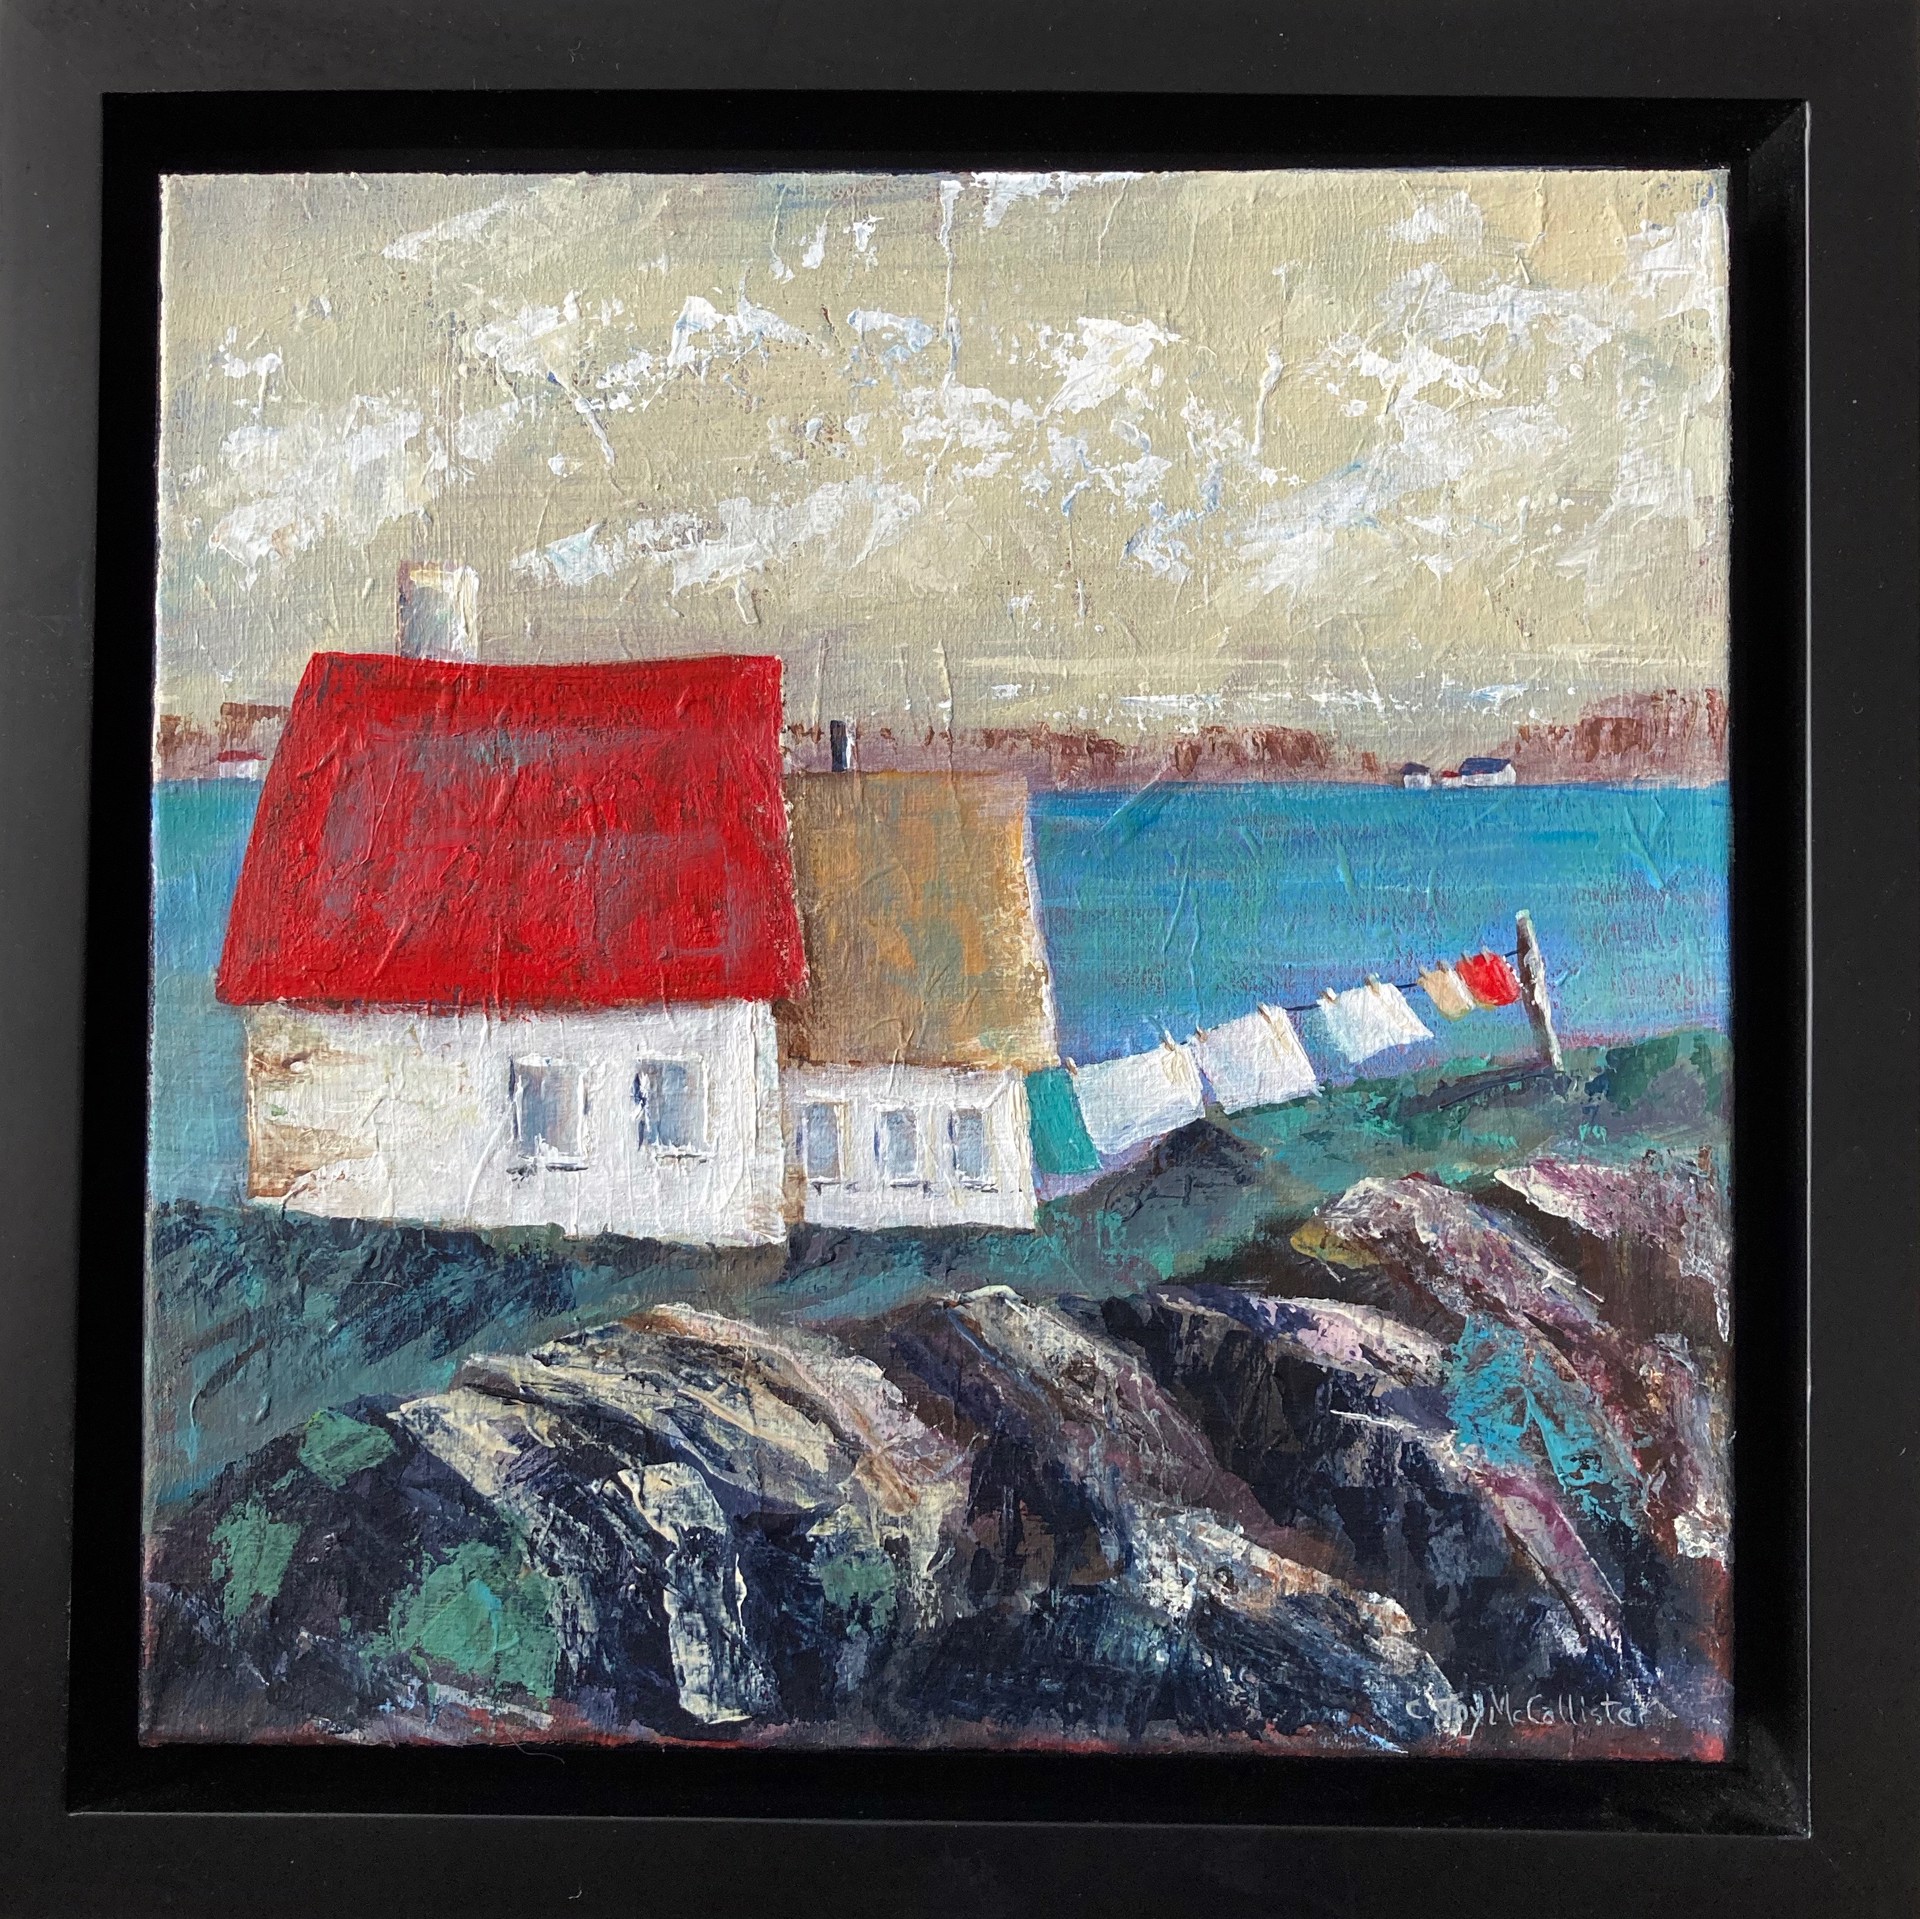 Baie Sainte-Marie, Nova Scotia by Joy McCallister